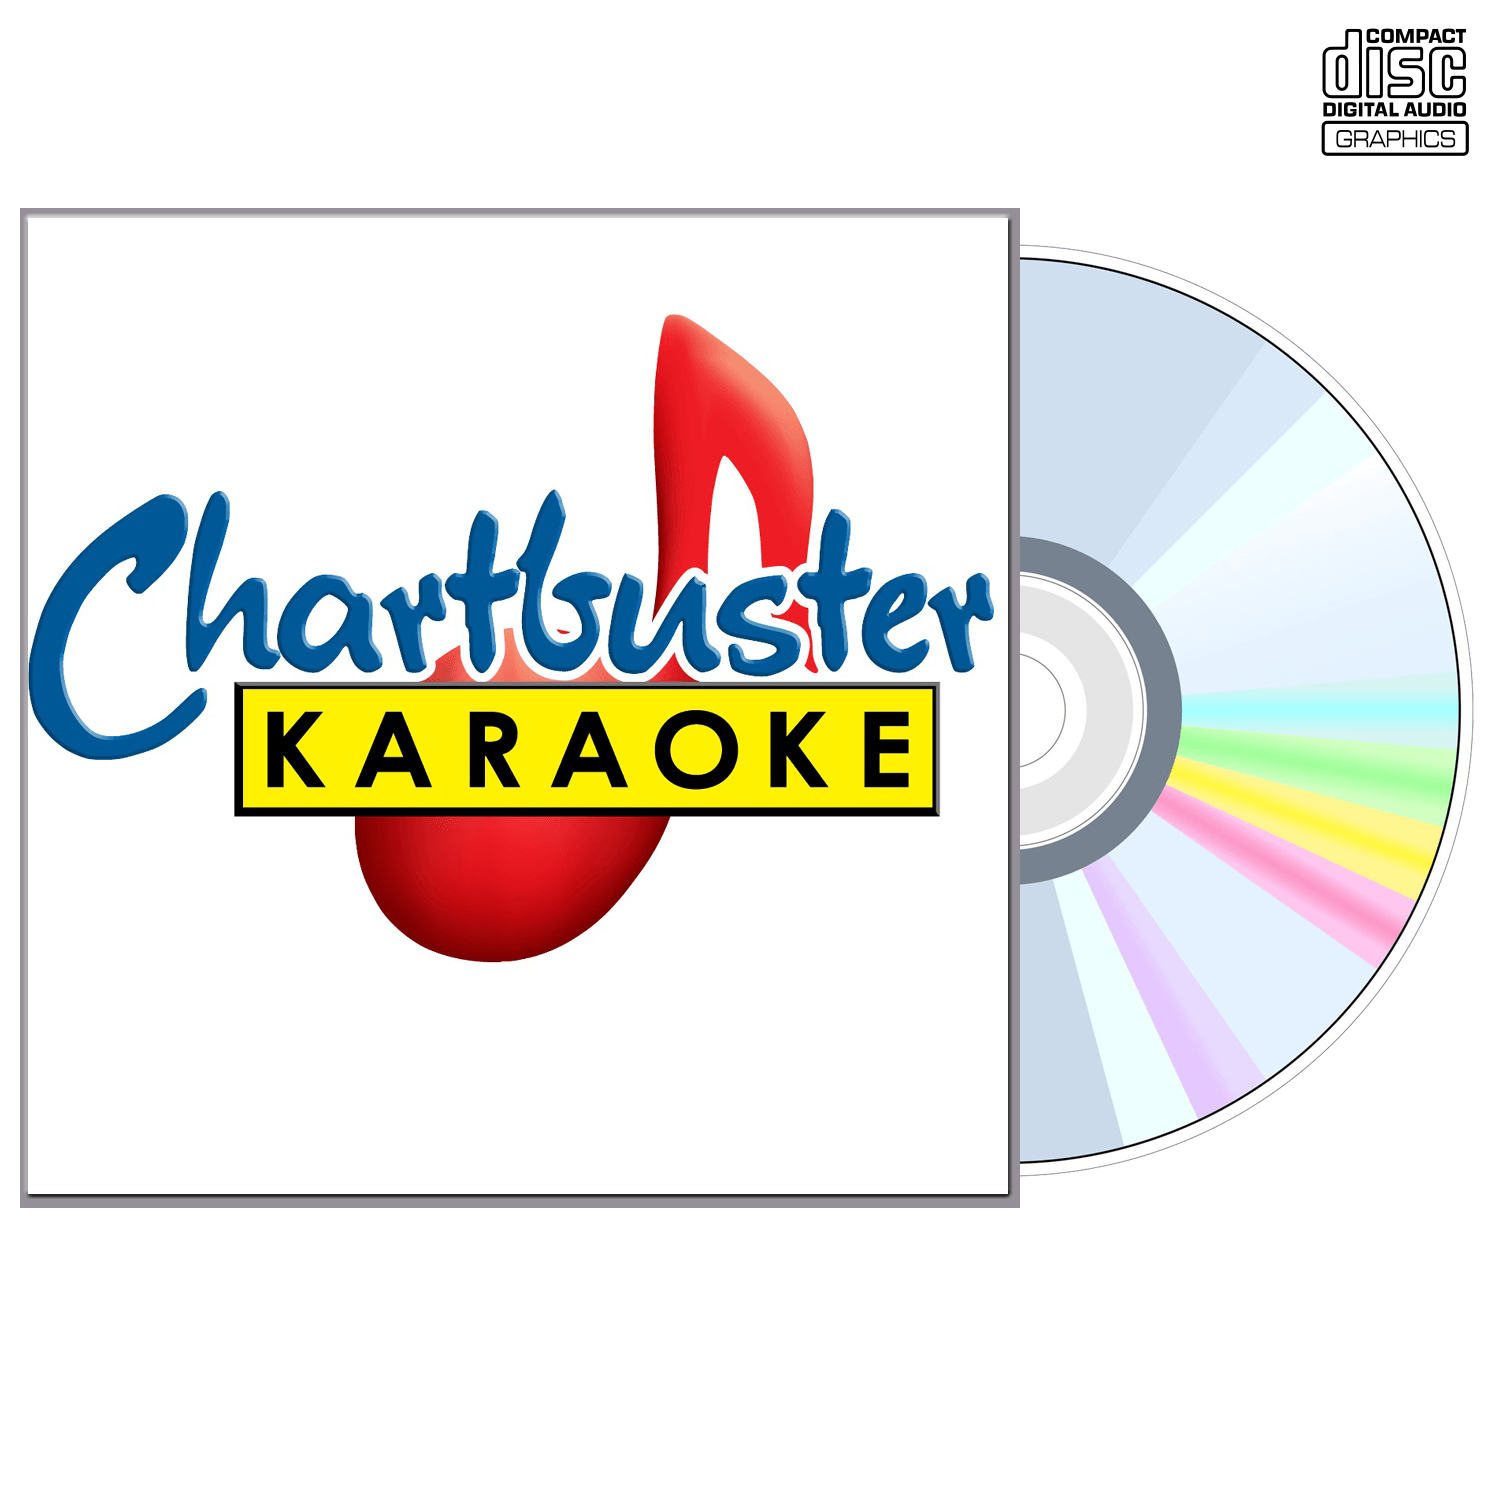 Peter Paul And Mary - CD+G - Chartbuster Karaoke - Karaoke Home Entertainment